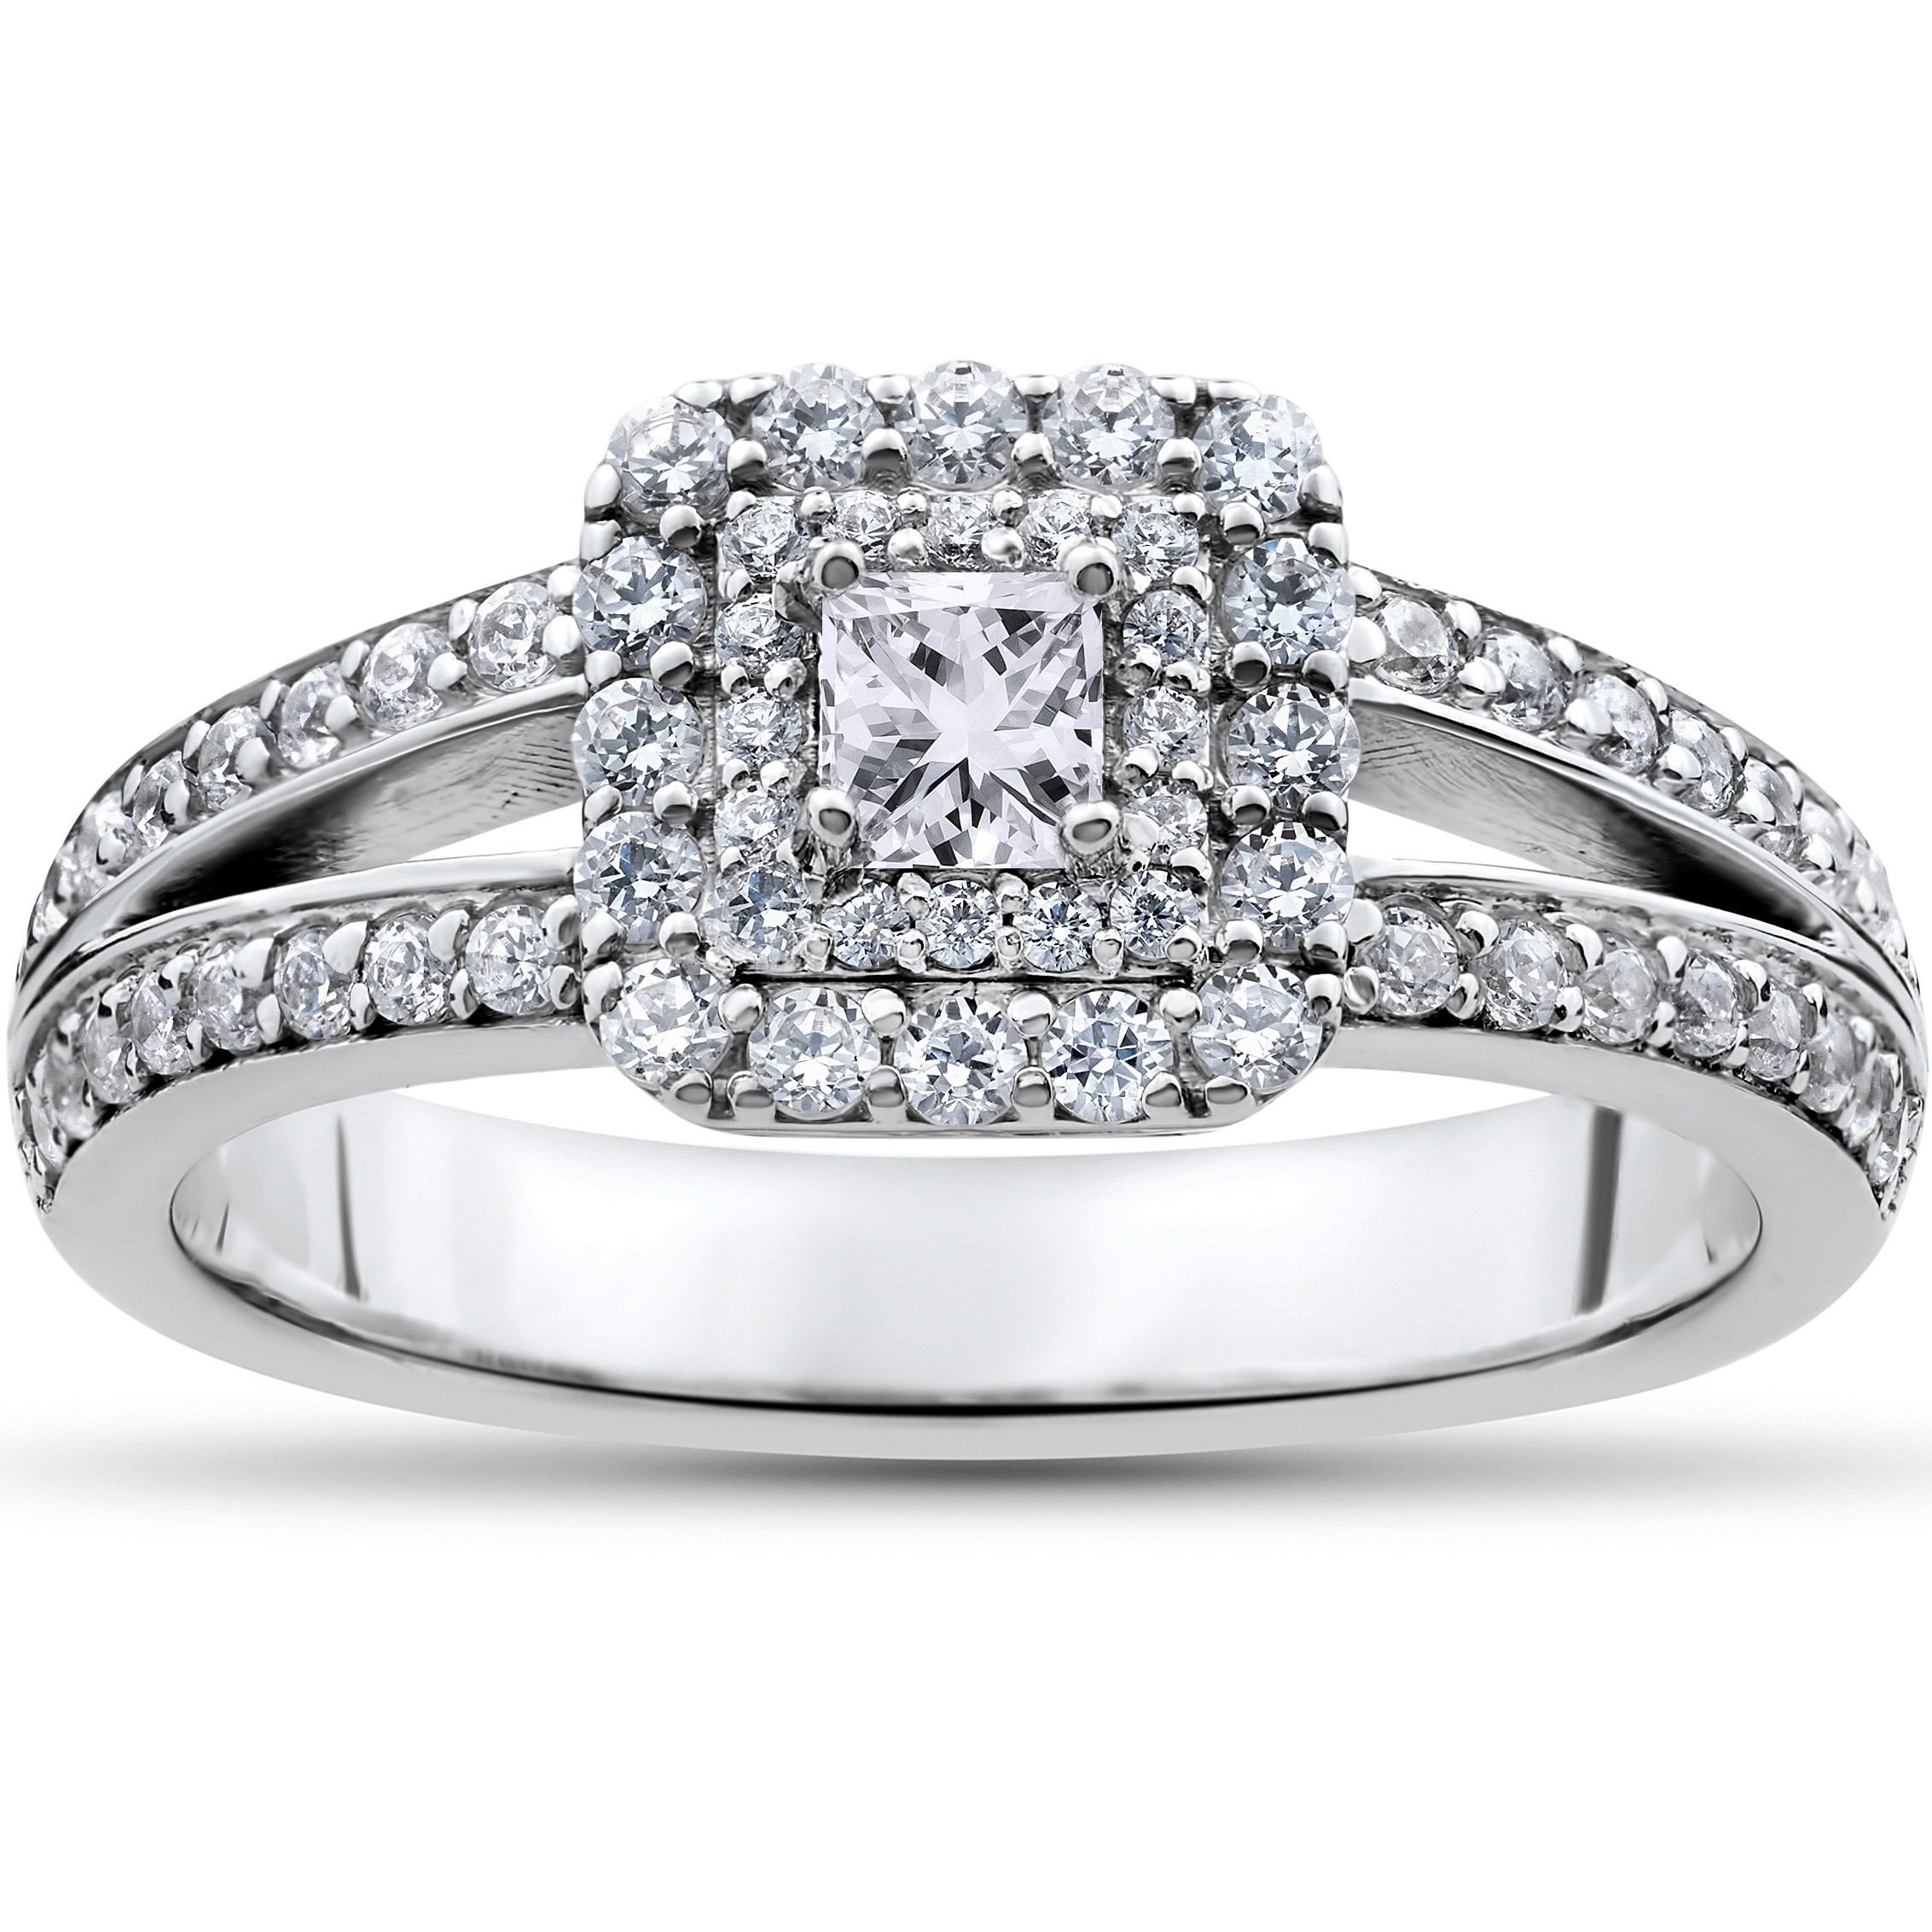 White Gold Princess Cut Engagement Ring
 1 ct Princess Cut Diamond Double Halo Engagement Ring 14k